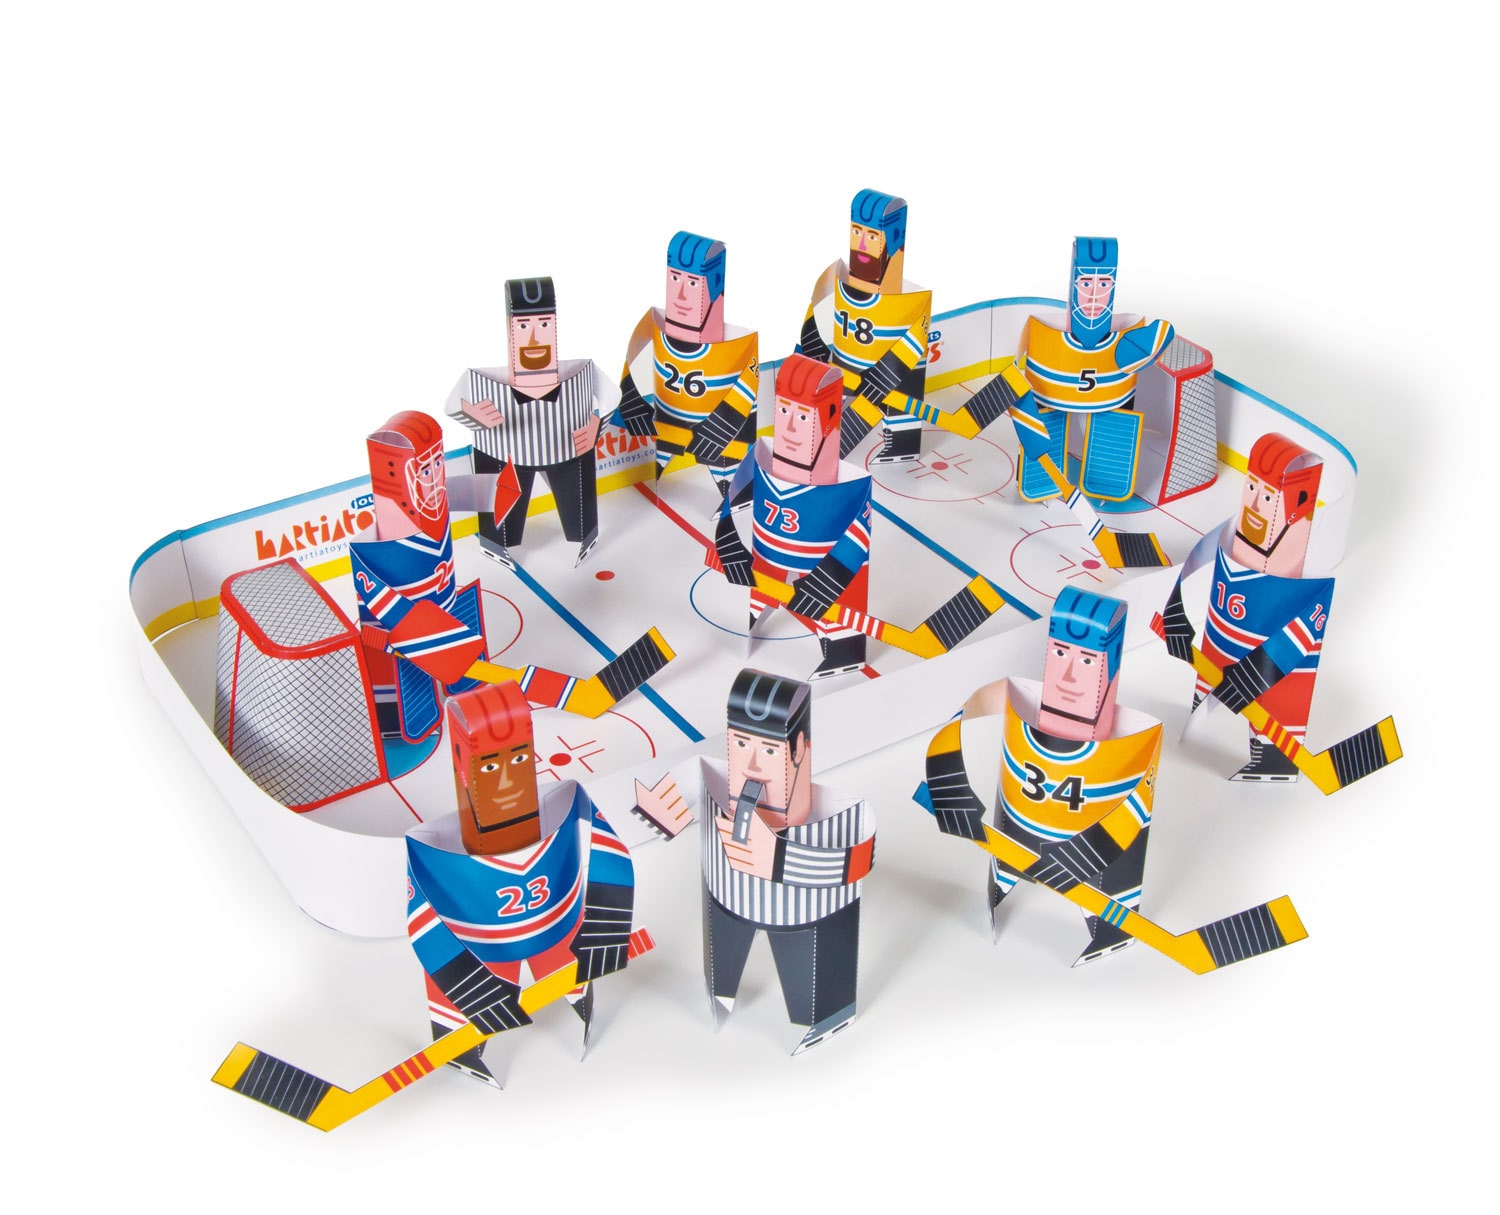 Paper House 3D Sticker Ice Hockey